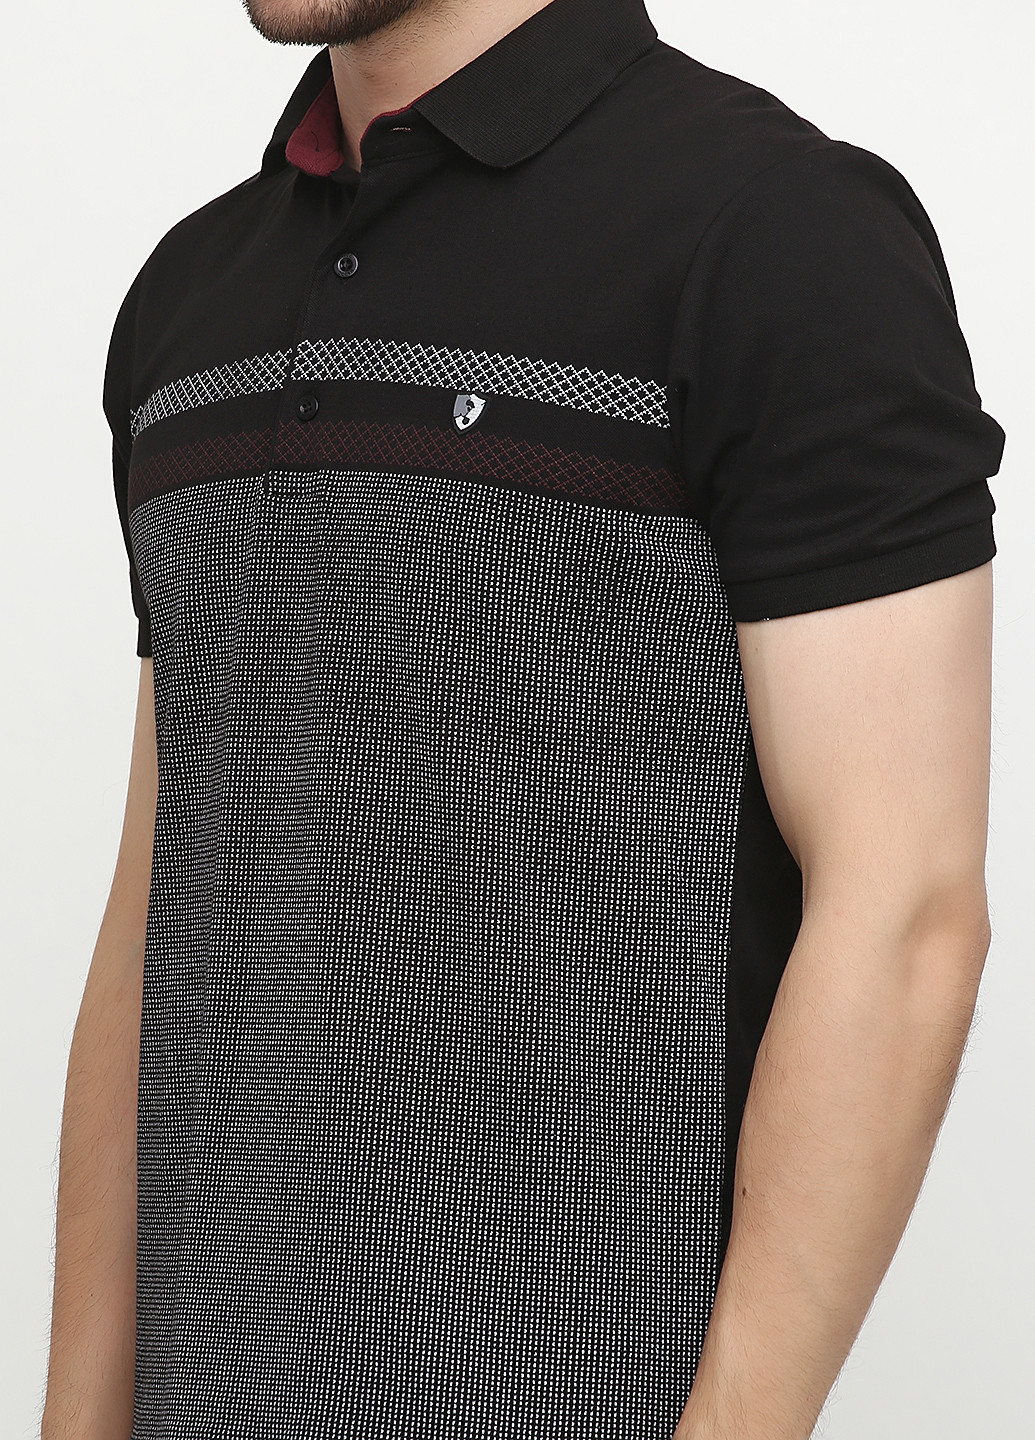 Черная футболка-поло для мужчин Madoc с геометрическим узором